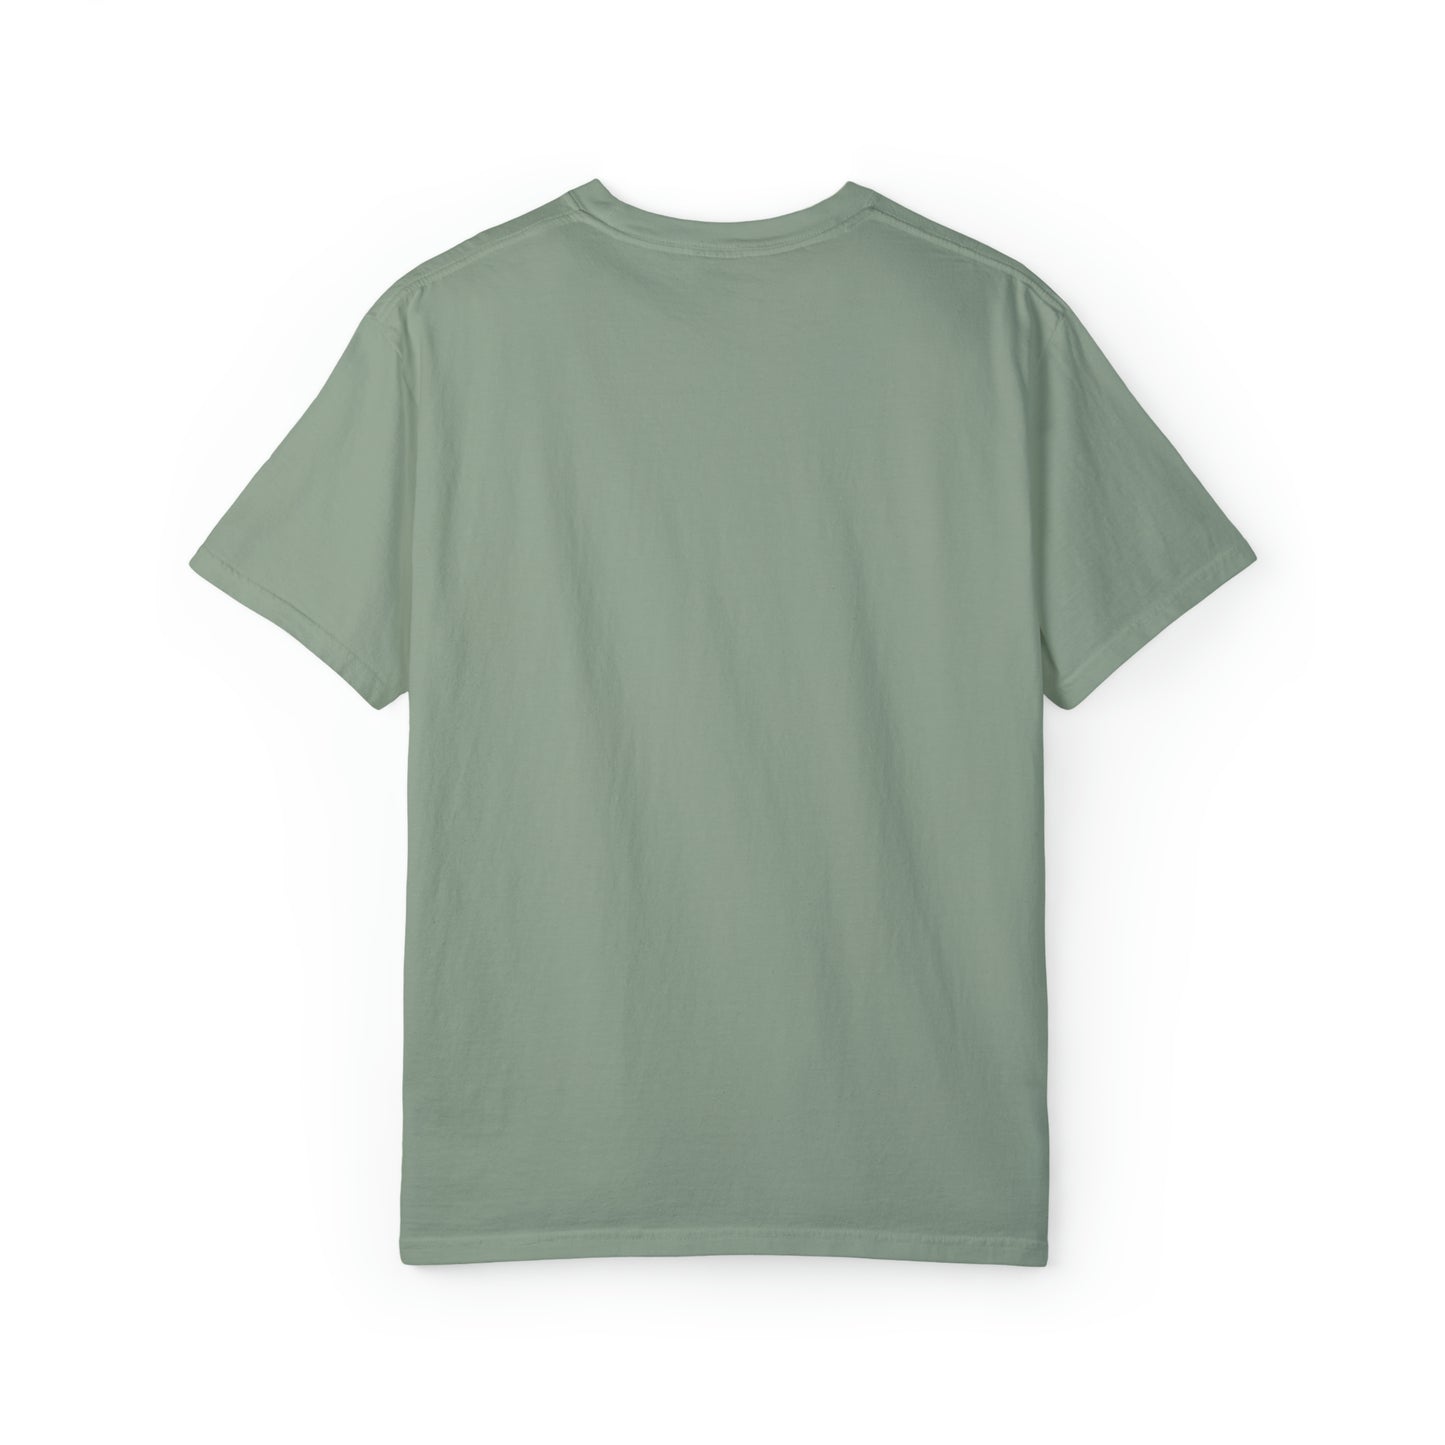 Lazy Daze Cannabis Coffee Culture Unisex Garment-Dyed T-shirt